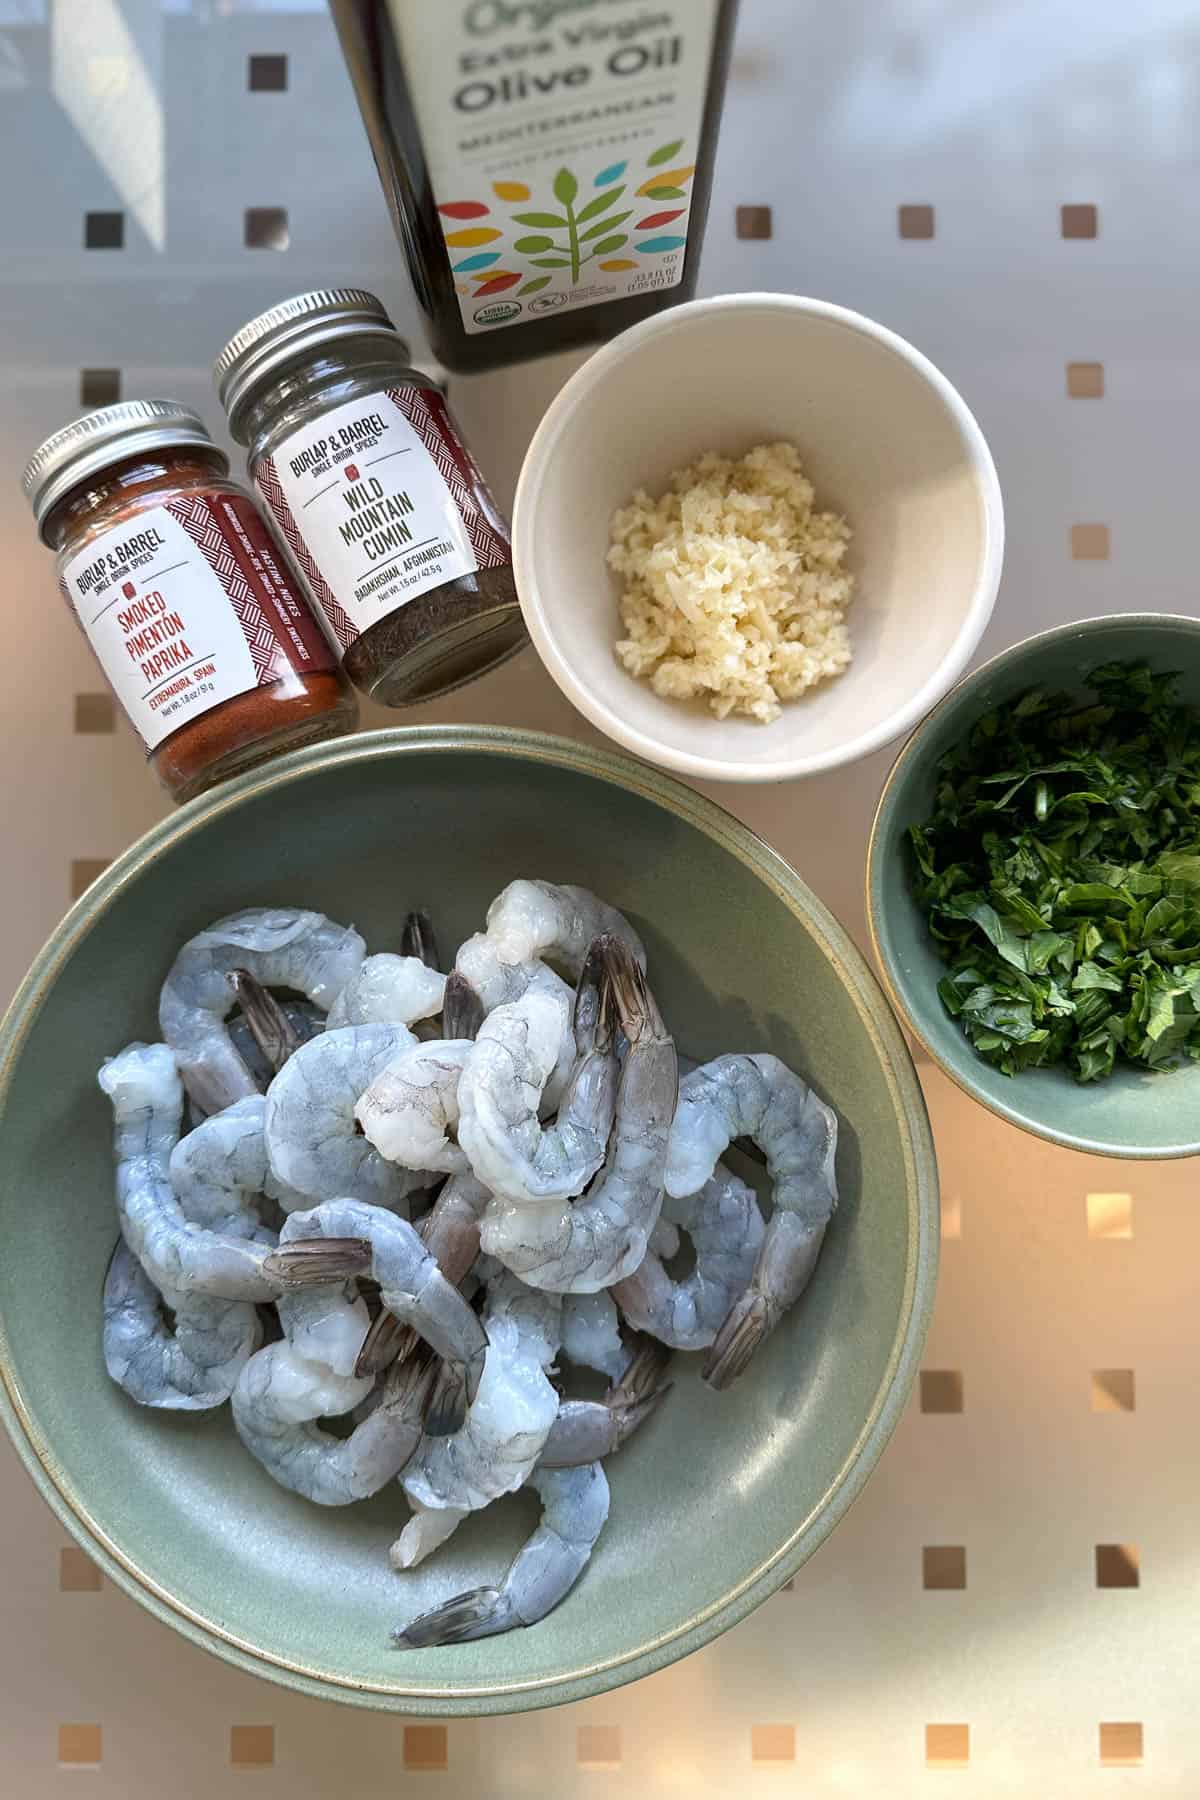 Ingredients for paprika shrimp on a table (shrimp, garlic, parsley, olive oil, cumin and paprika).